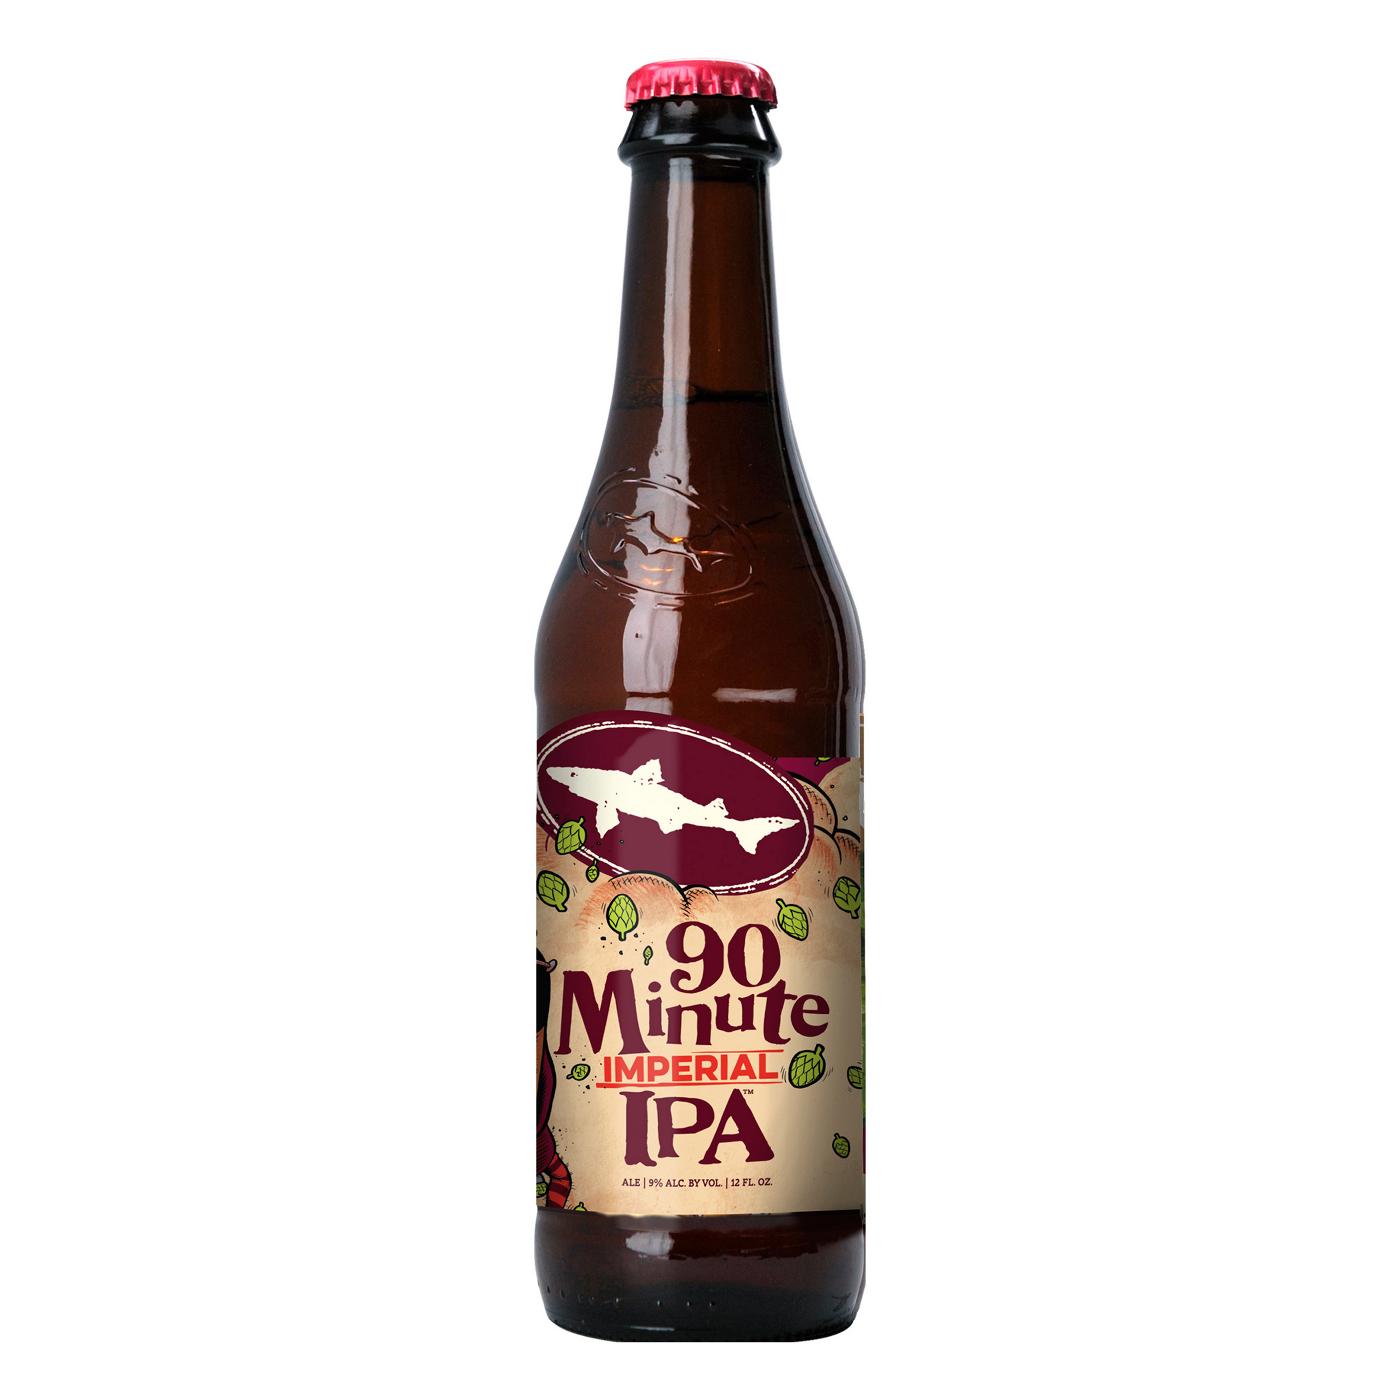 Dogfish Head 90 Minute IPA Beer 6 pk Bottles; image 2 of 4